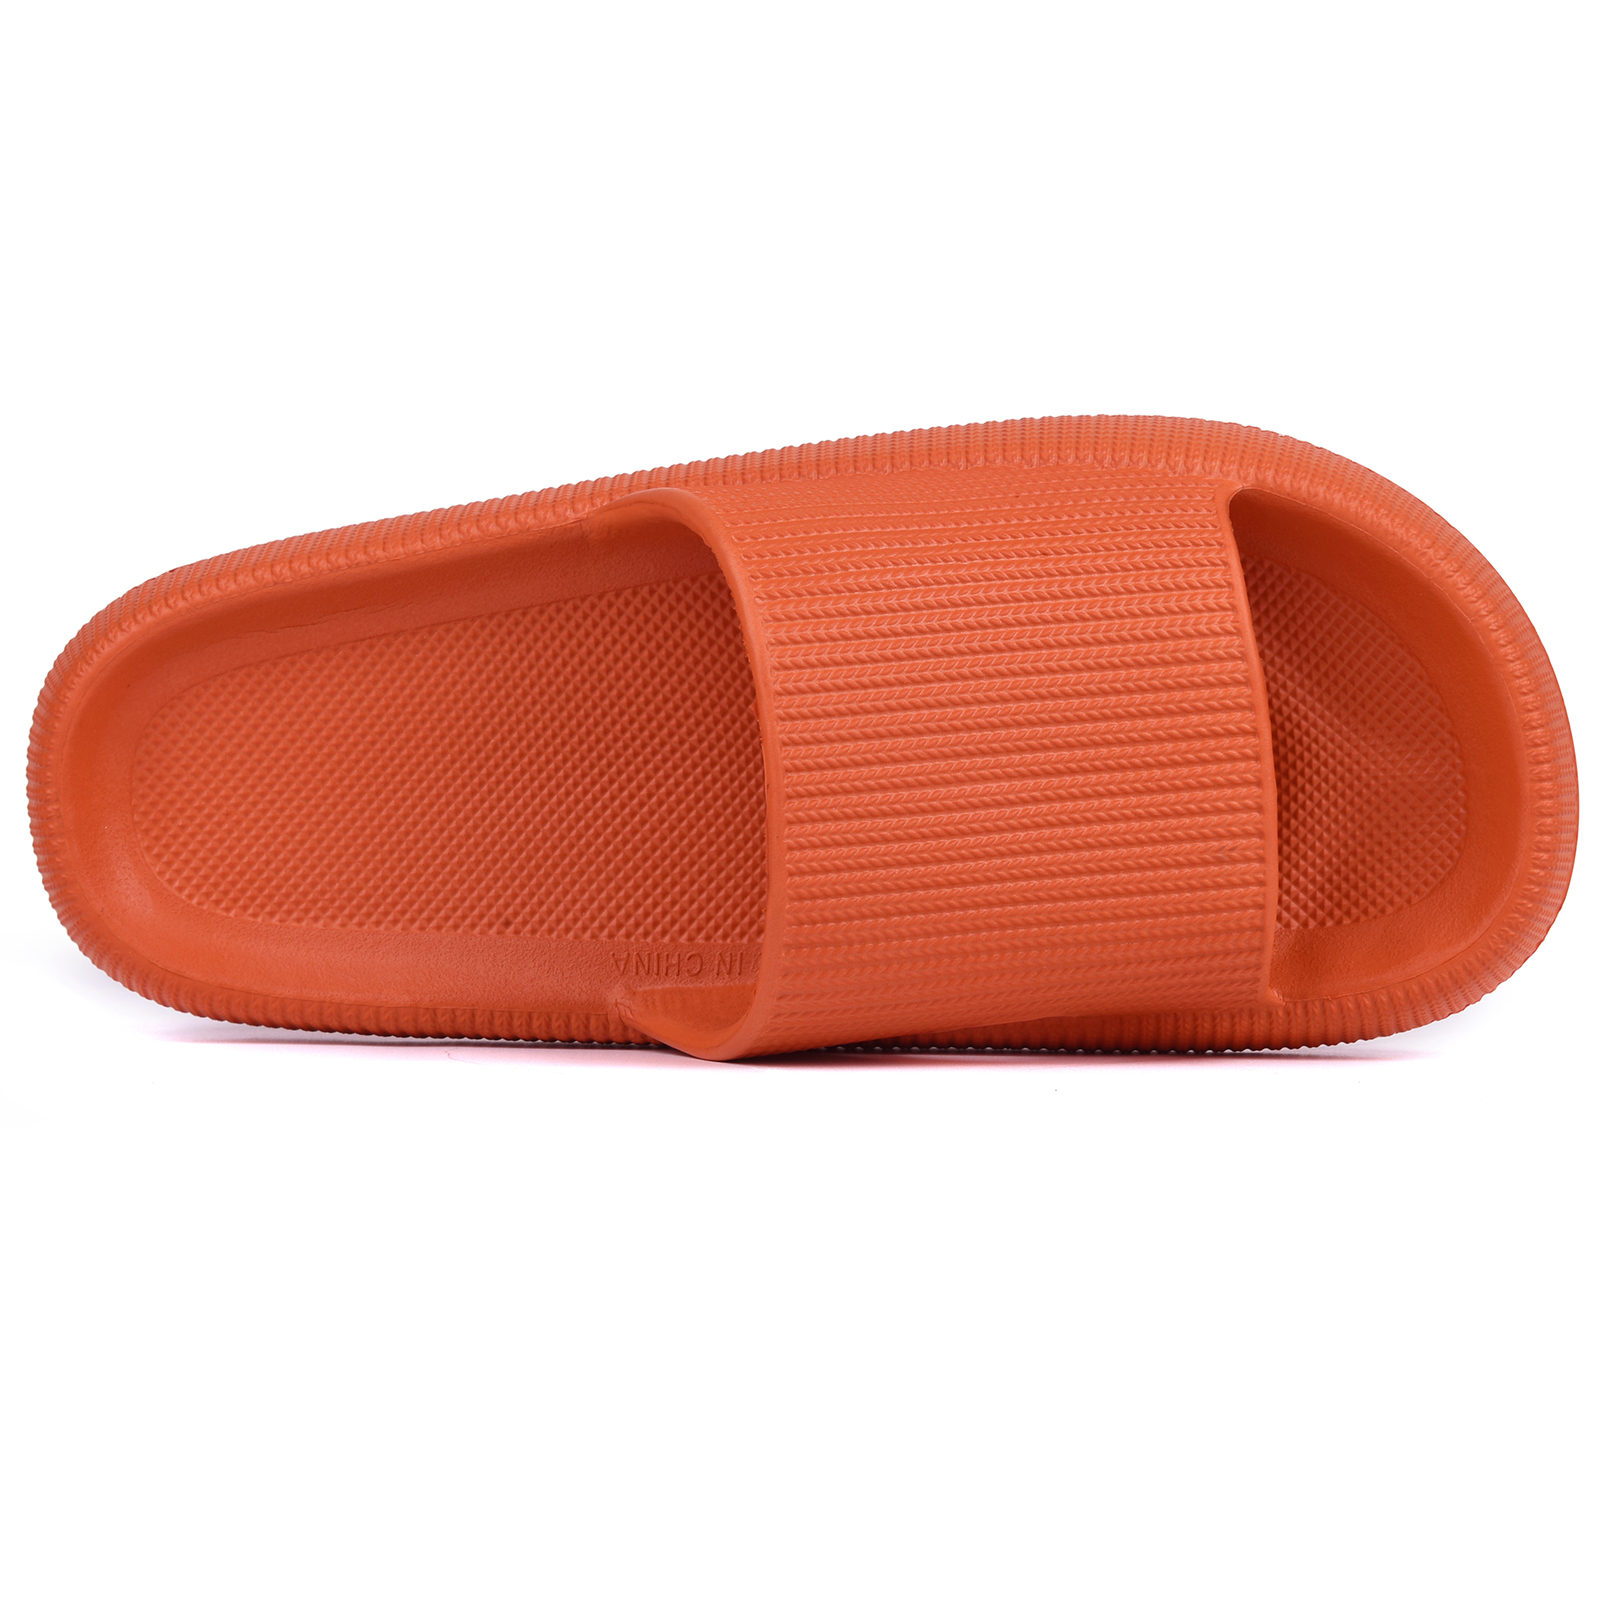 VONMAY Unisex Slides Sandals Soft Thick Sole Non-Slip Pillow Sandals - image 3 of 8